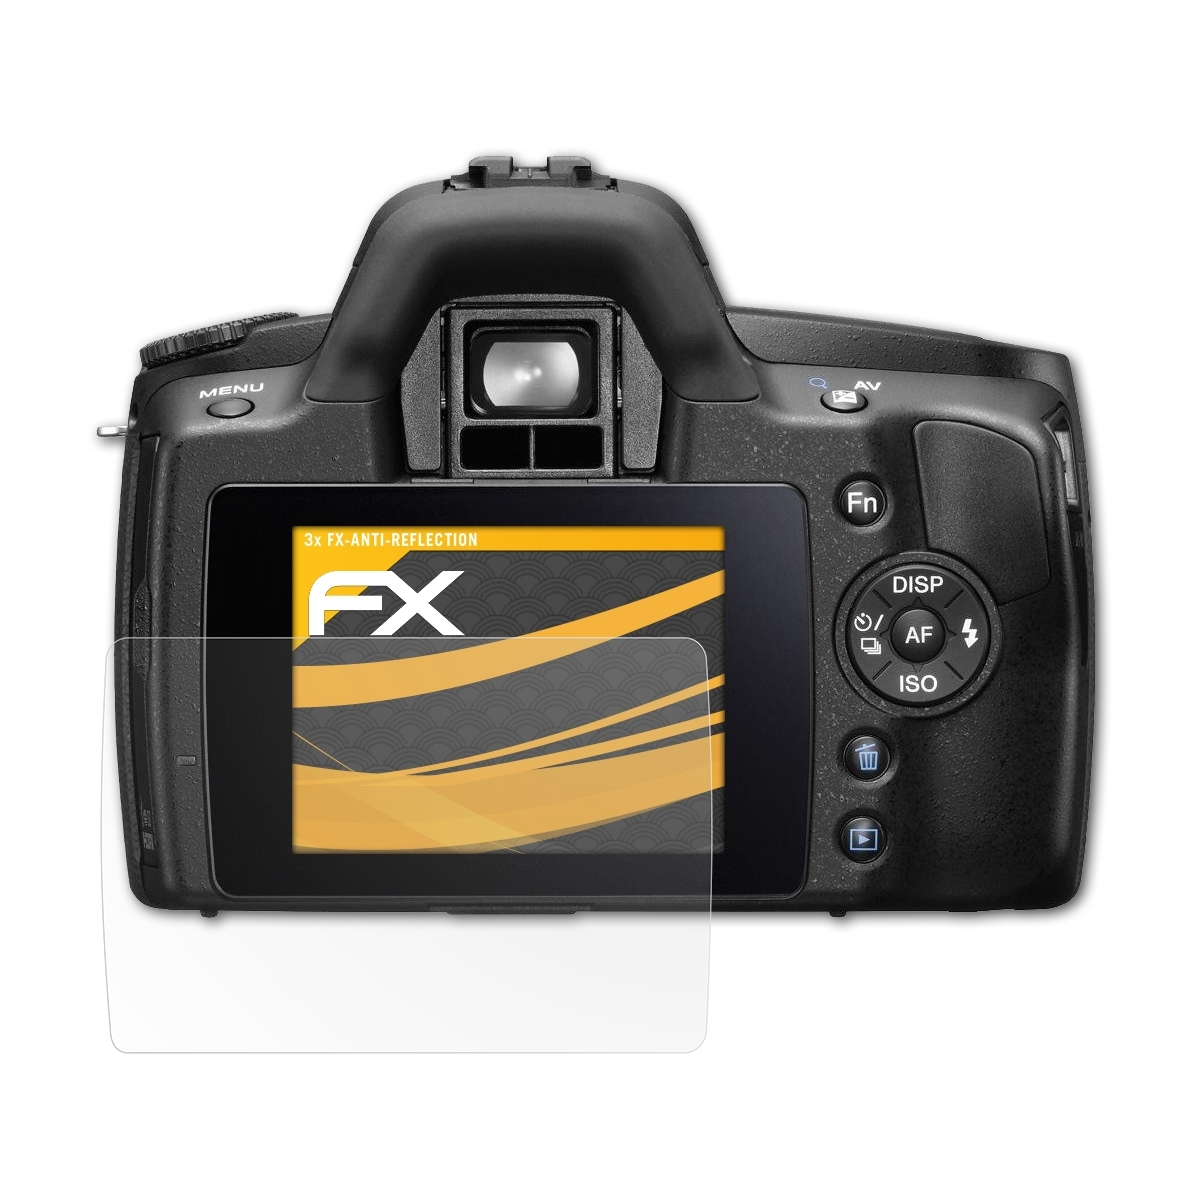 a290 Alpha Sony 3x ATFOLIX (DSLR-A290)) FX-Antireflex Displayschutz(für